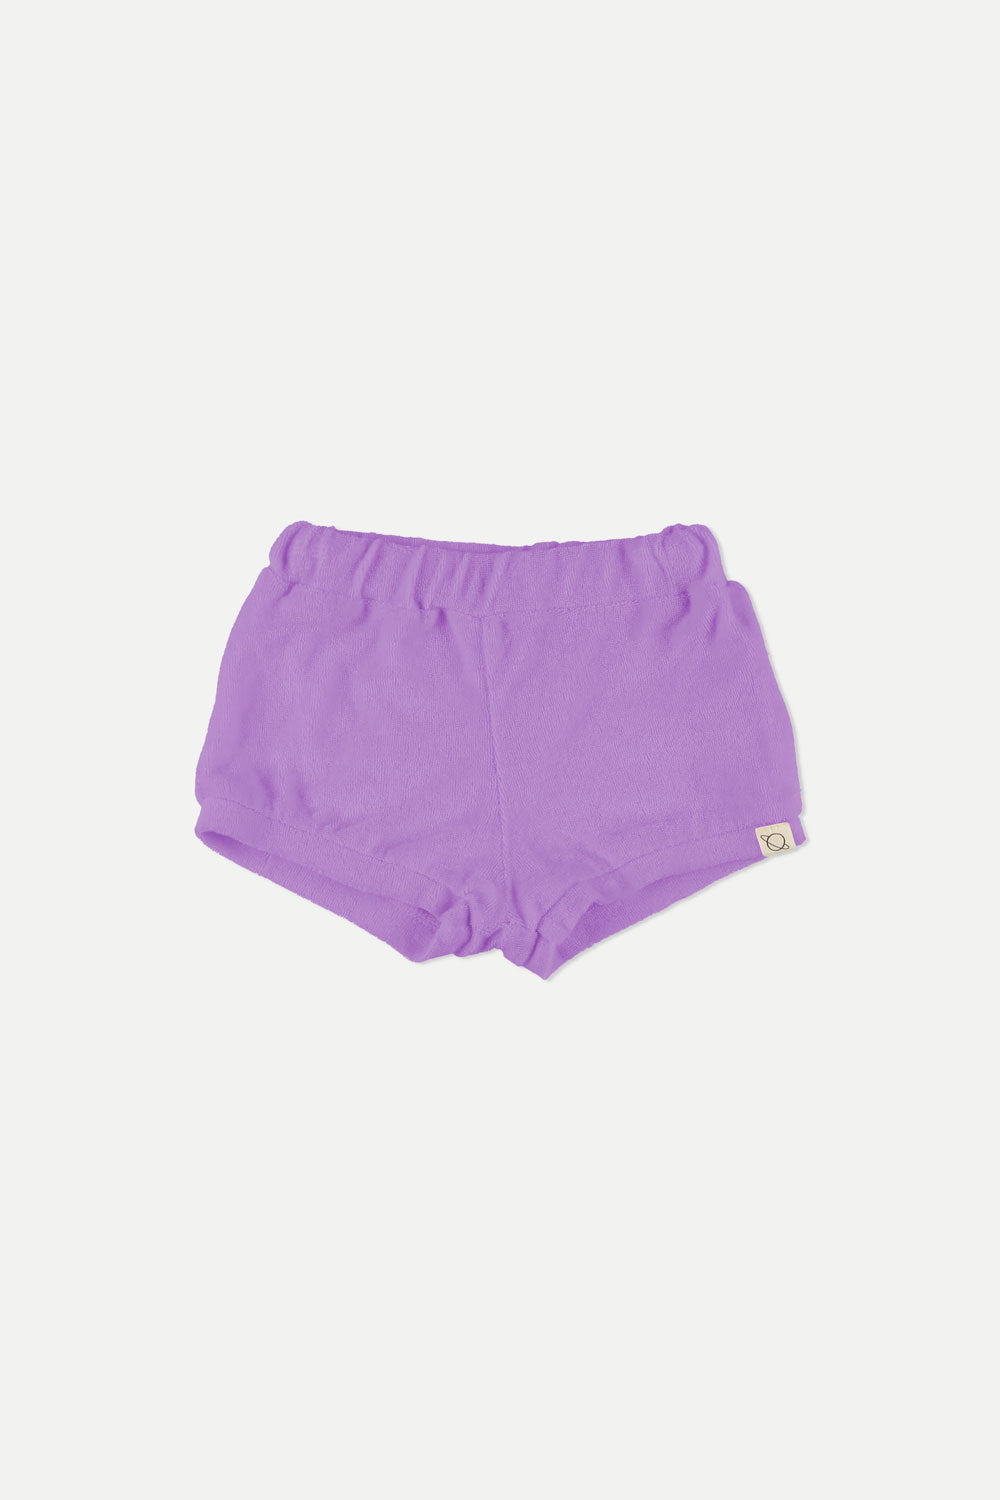 My little cozmo - conrad281 - terry shorts - purple